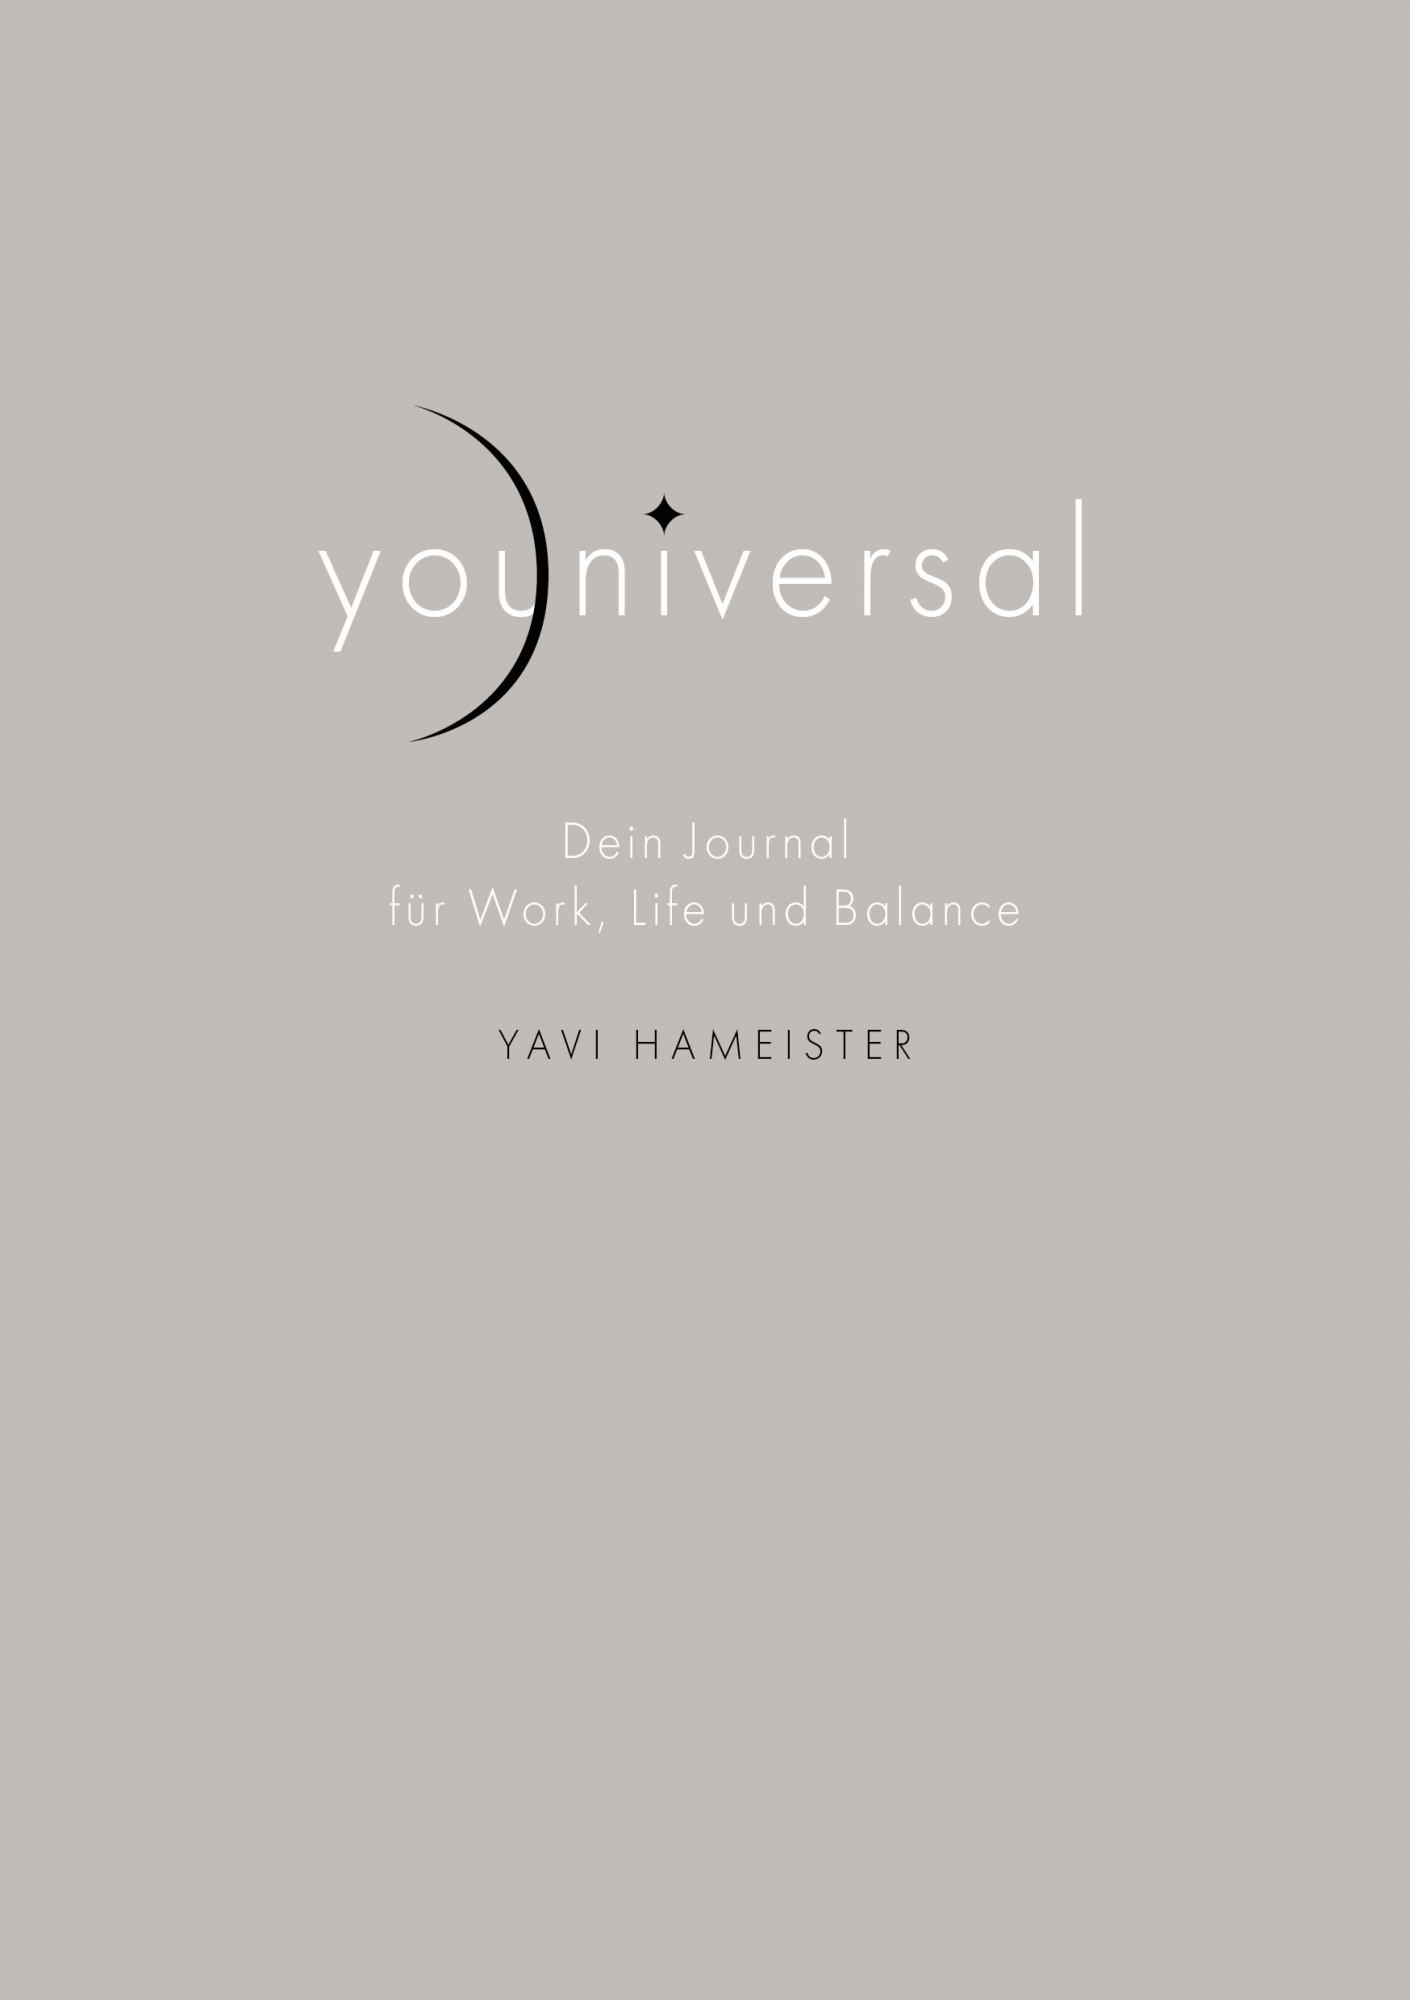 youniversal Journal Yavi Hameister mvg